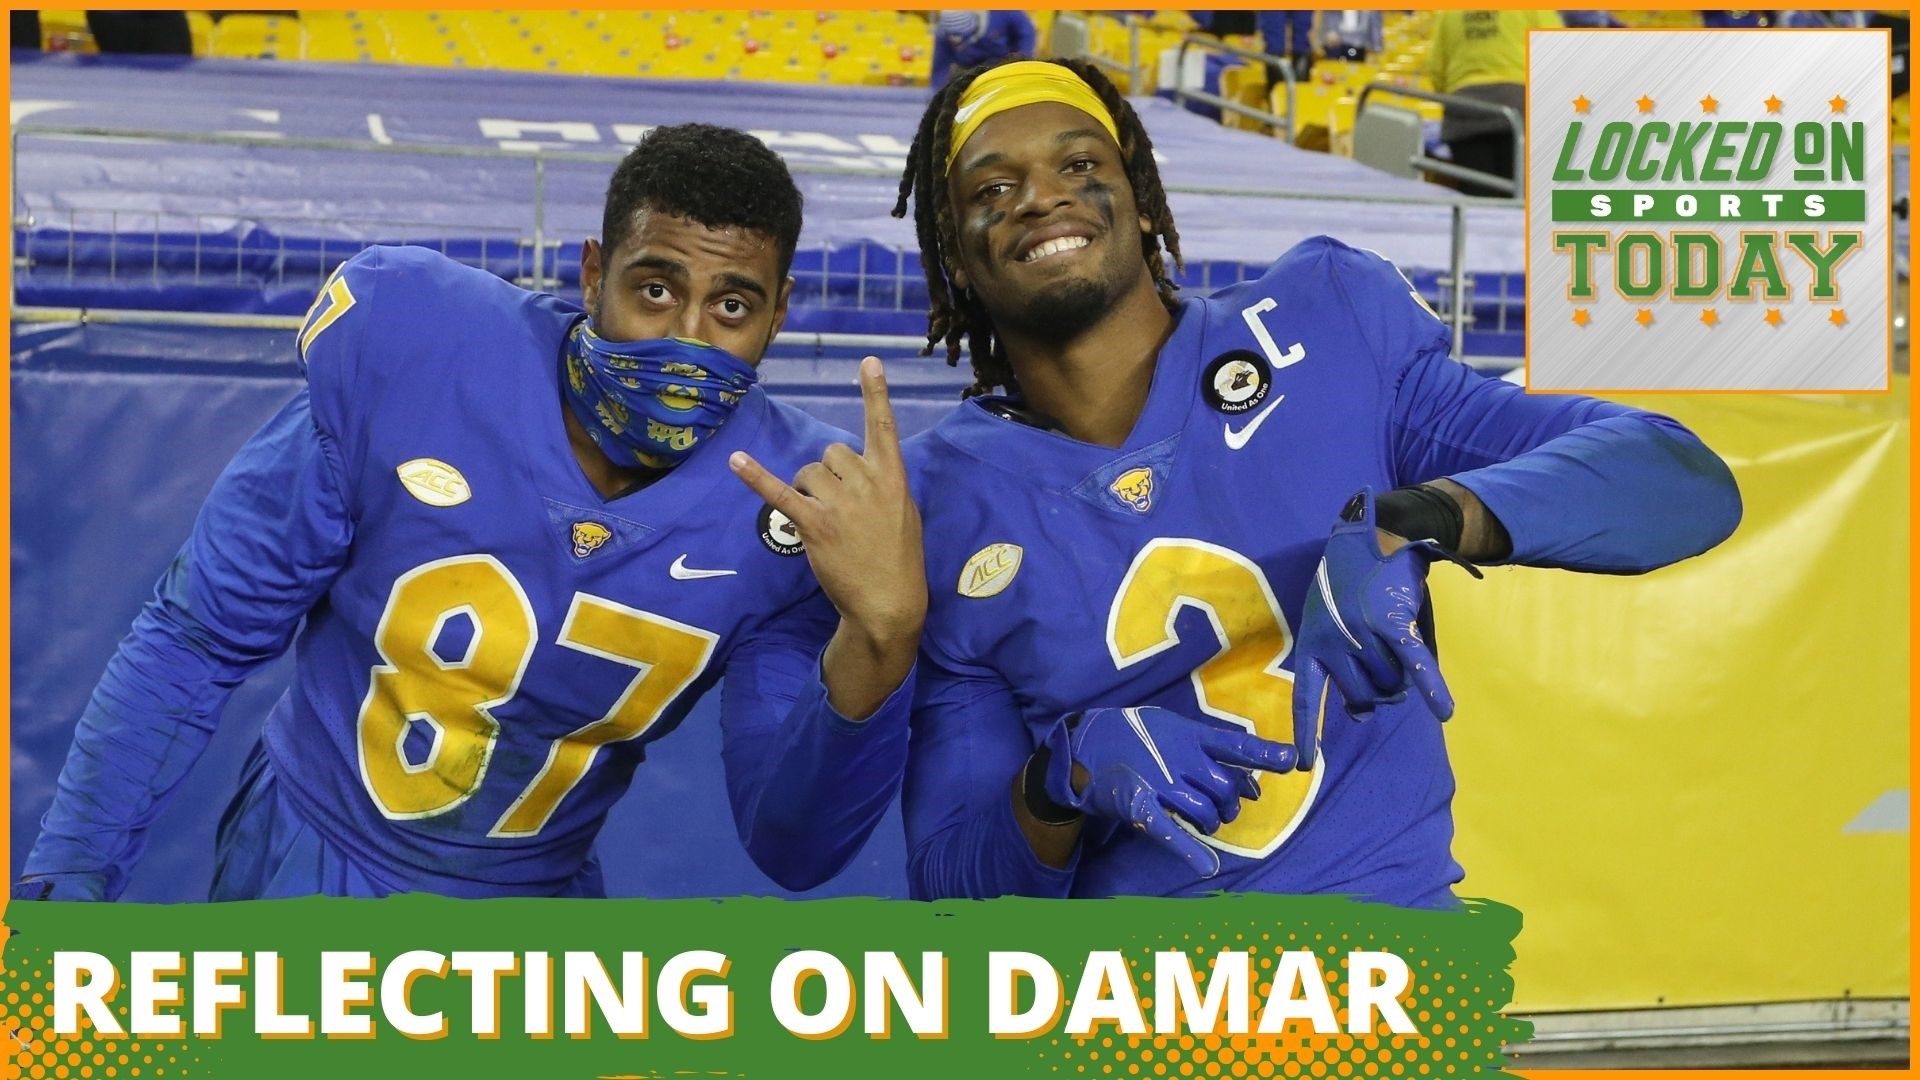 Jan. 6 2023 news on NFL star Damar Hamlin's condition